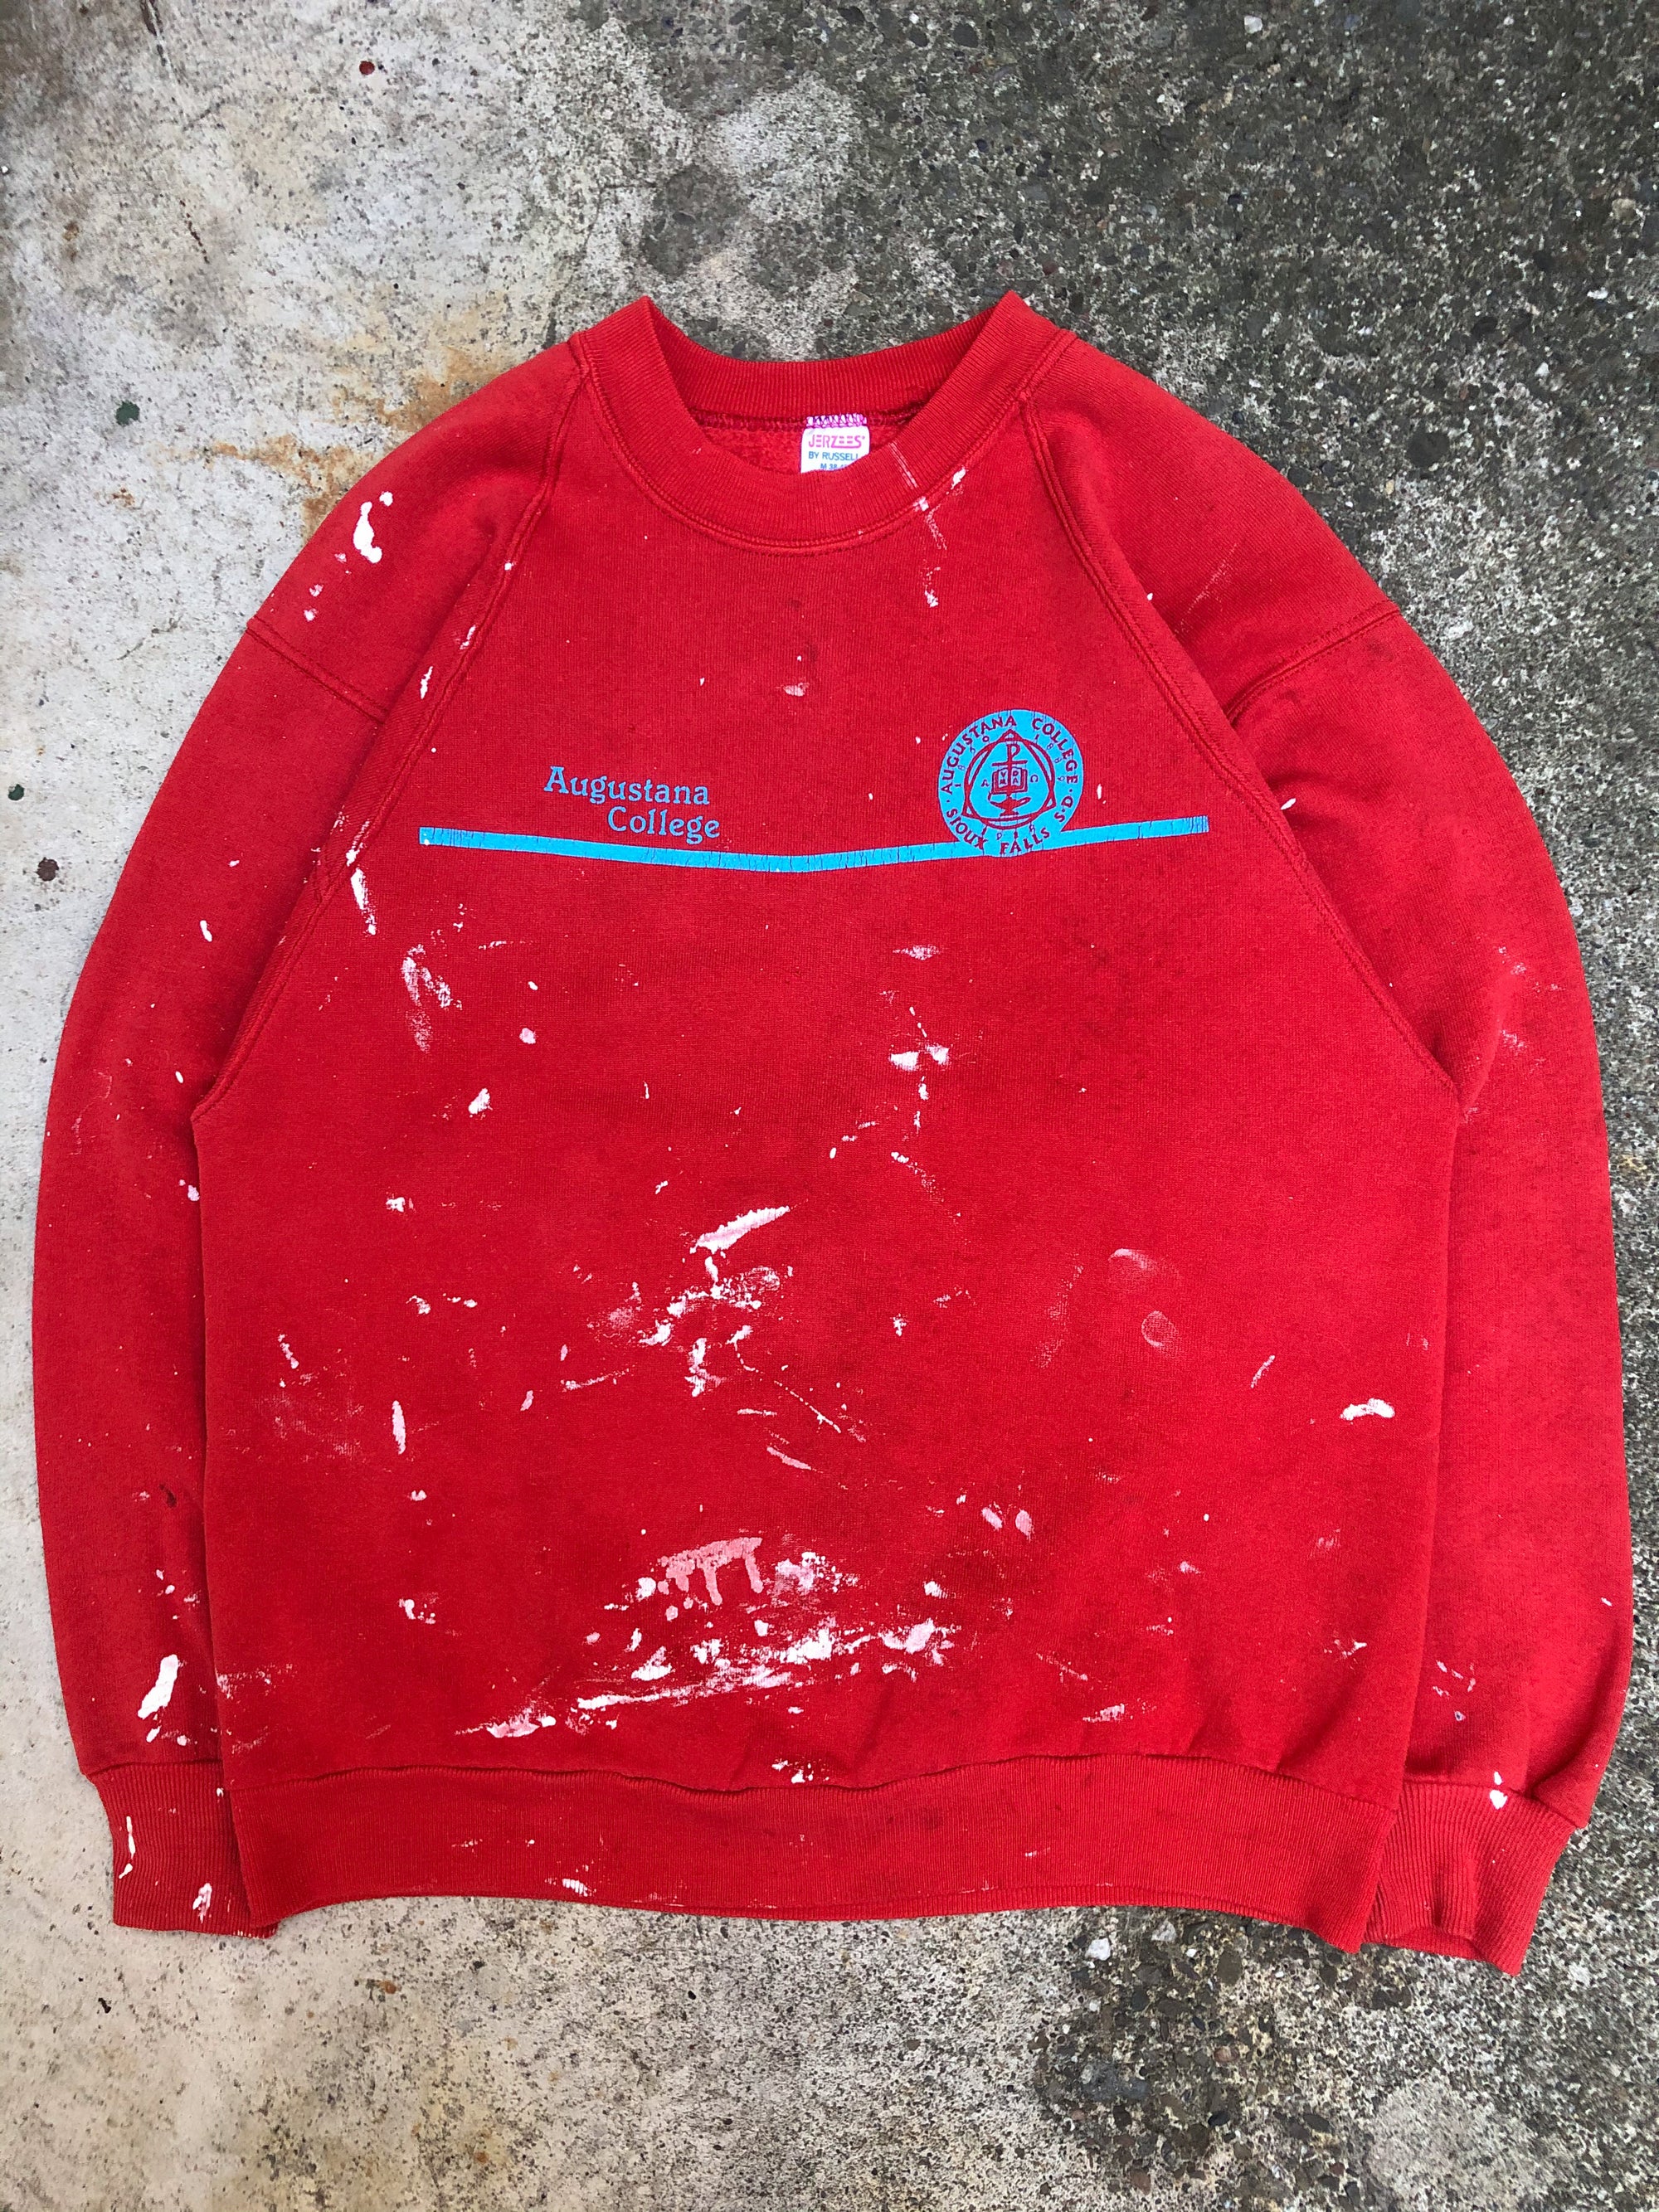 1980s Paint Faded Red “Augustana College” Raglan Sweatshirt (S/M)